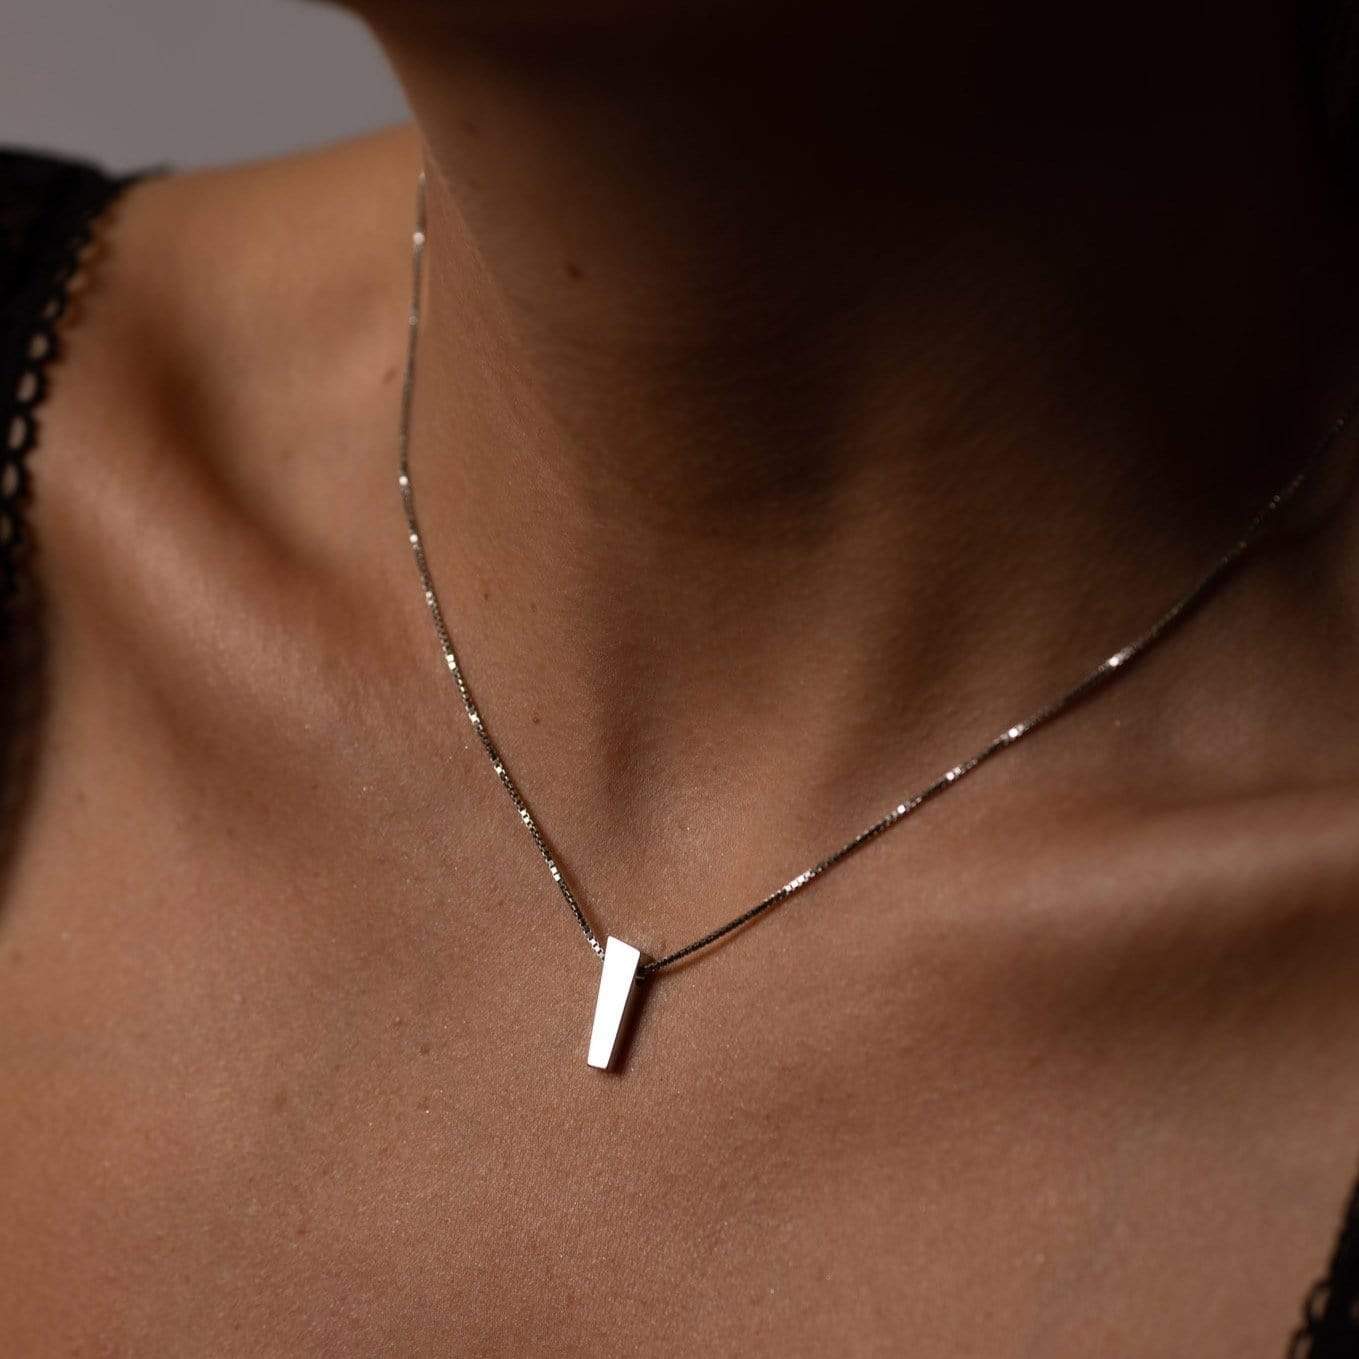 Timeless necklace design by Per Ekenberg